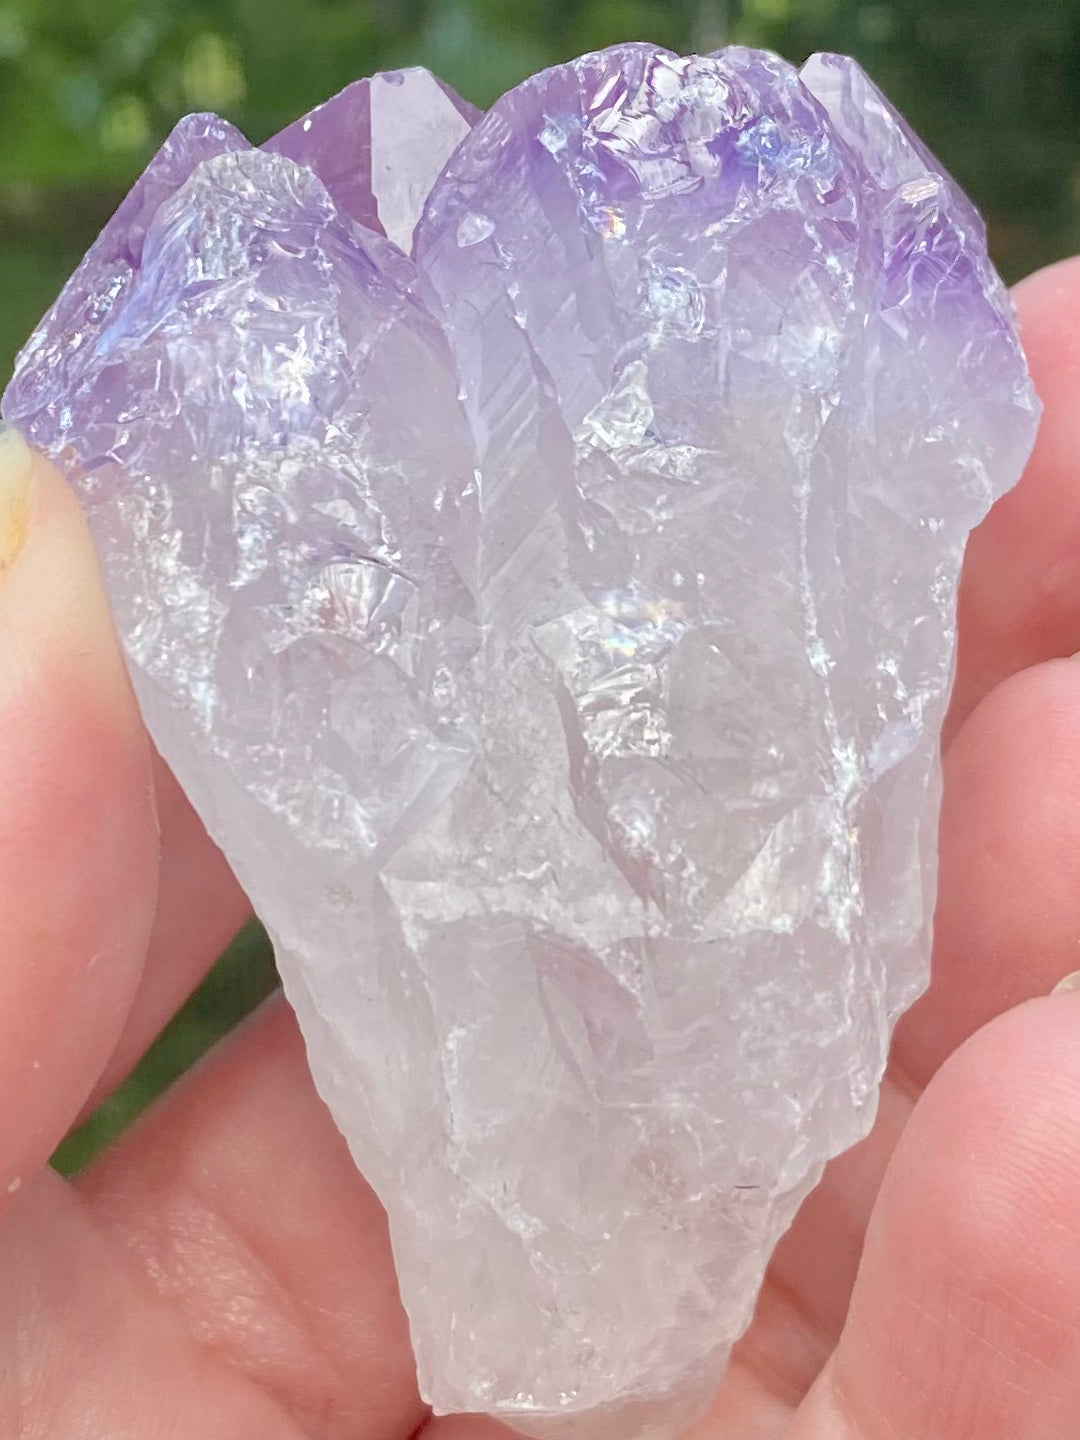 Purple Amethyst Point Crystal from Brazil - Morganna’s Treasures 